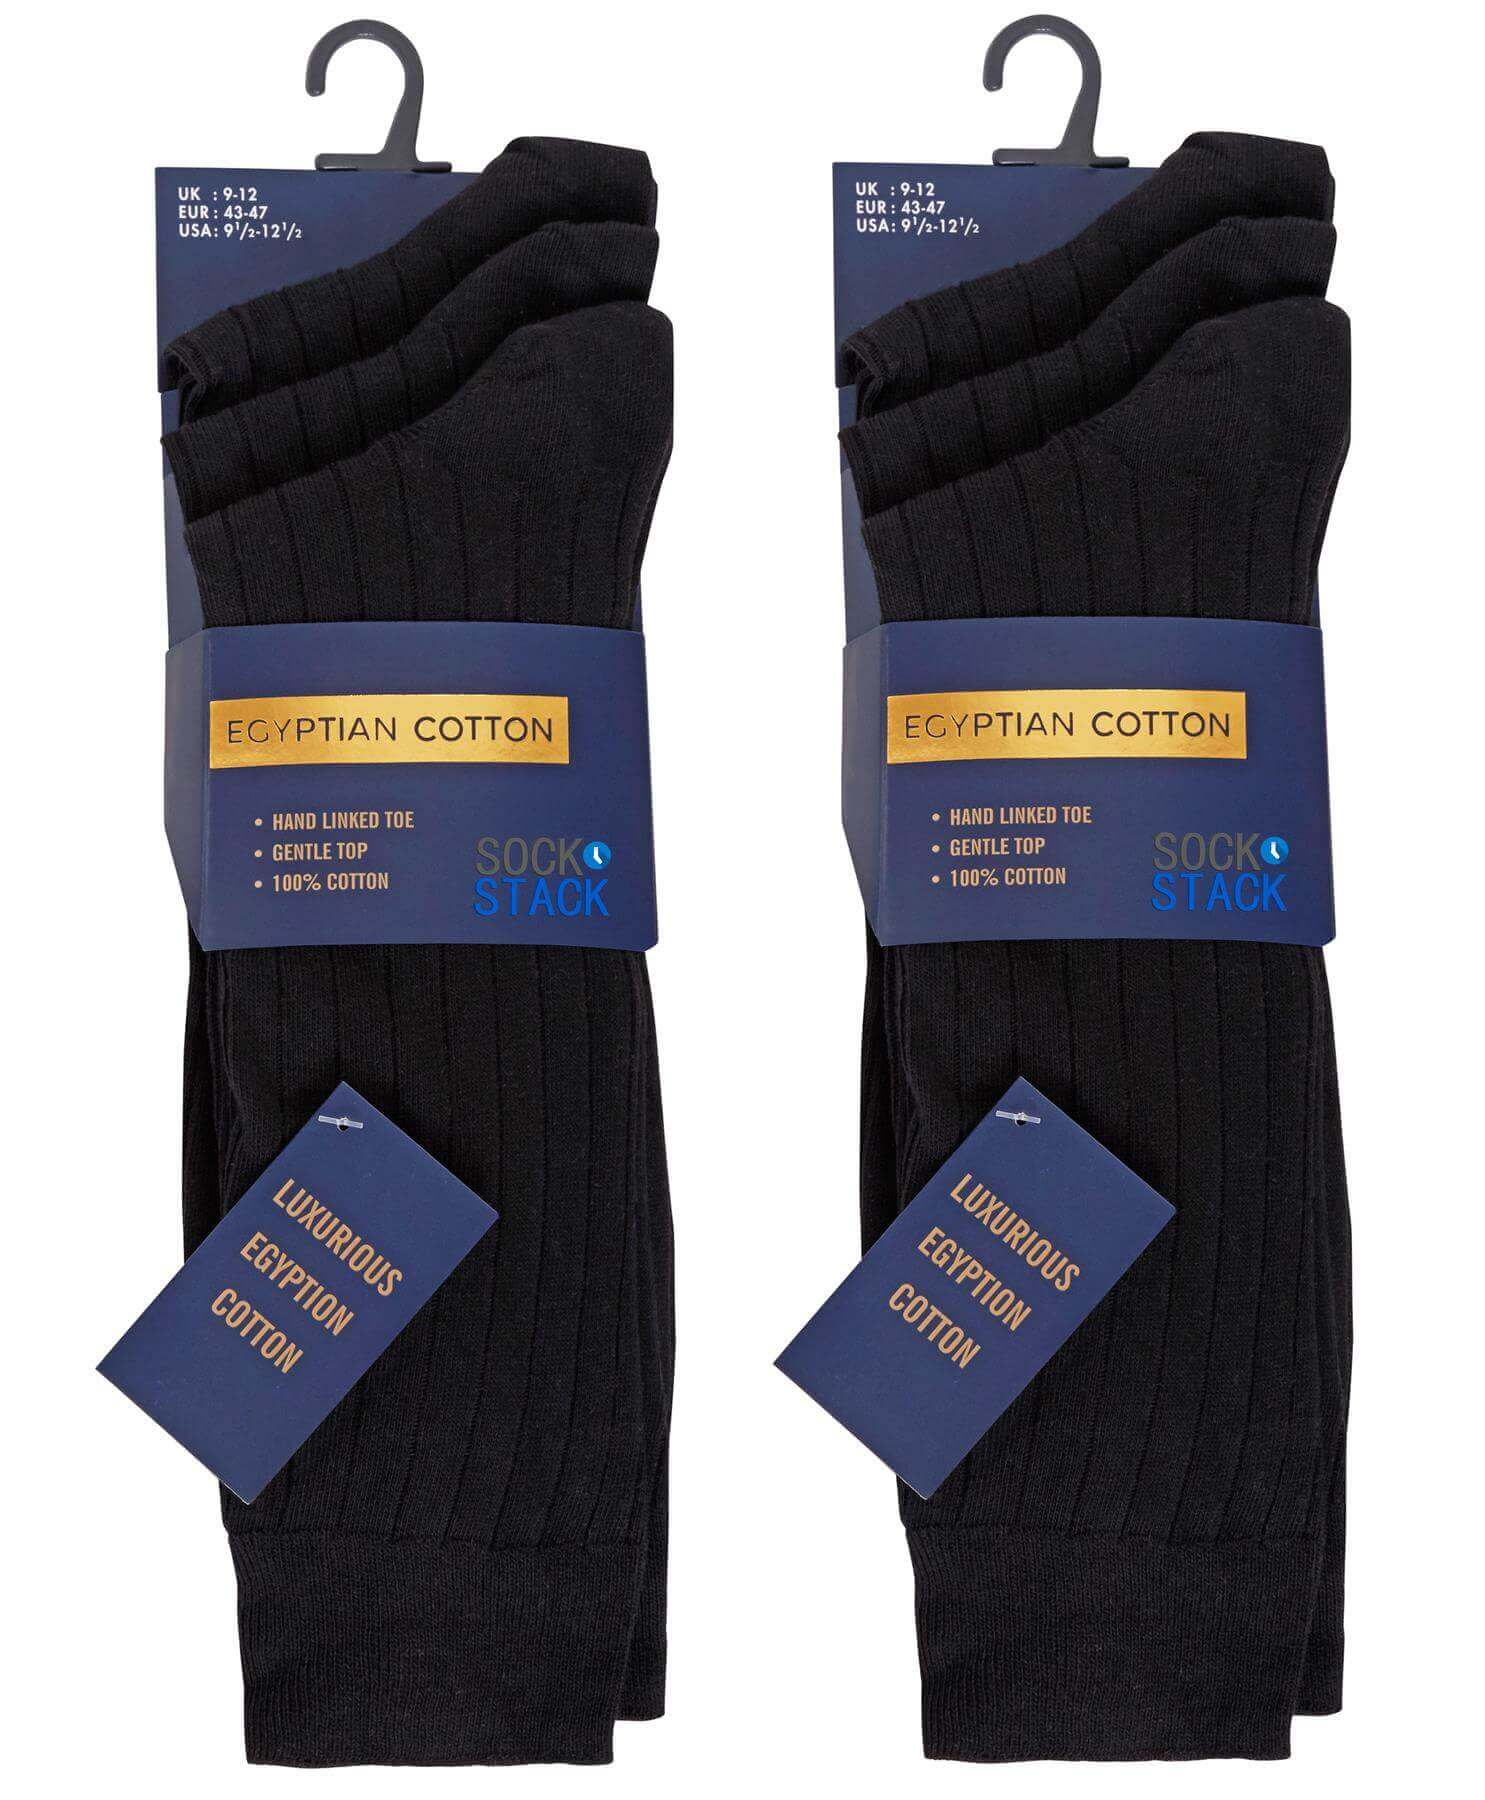 6 Pairs Of Men's Egyptian Cotton Socks Super Soft Formal Dress Holiday Socks. Buy now for £10.00. A Socks by Sock Stack. 12-14, 6-8, 9-12, black, boot, boys, comfortable, cotton, dress socks, dressing, egytian cotton, fomal, holidays, mens, mens socks, Ou